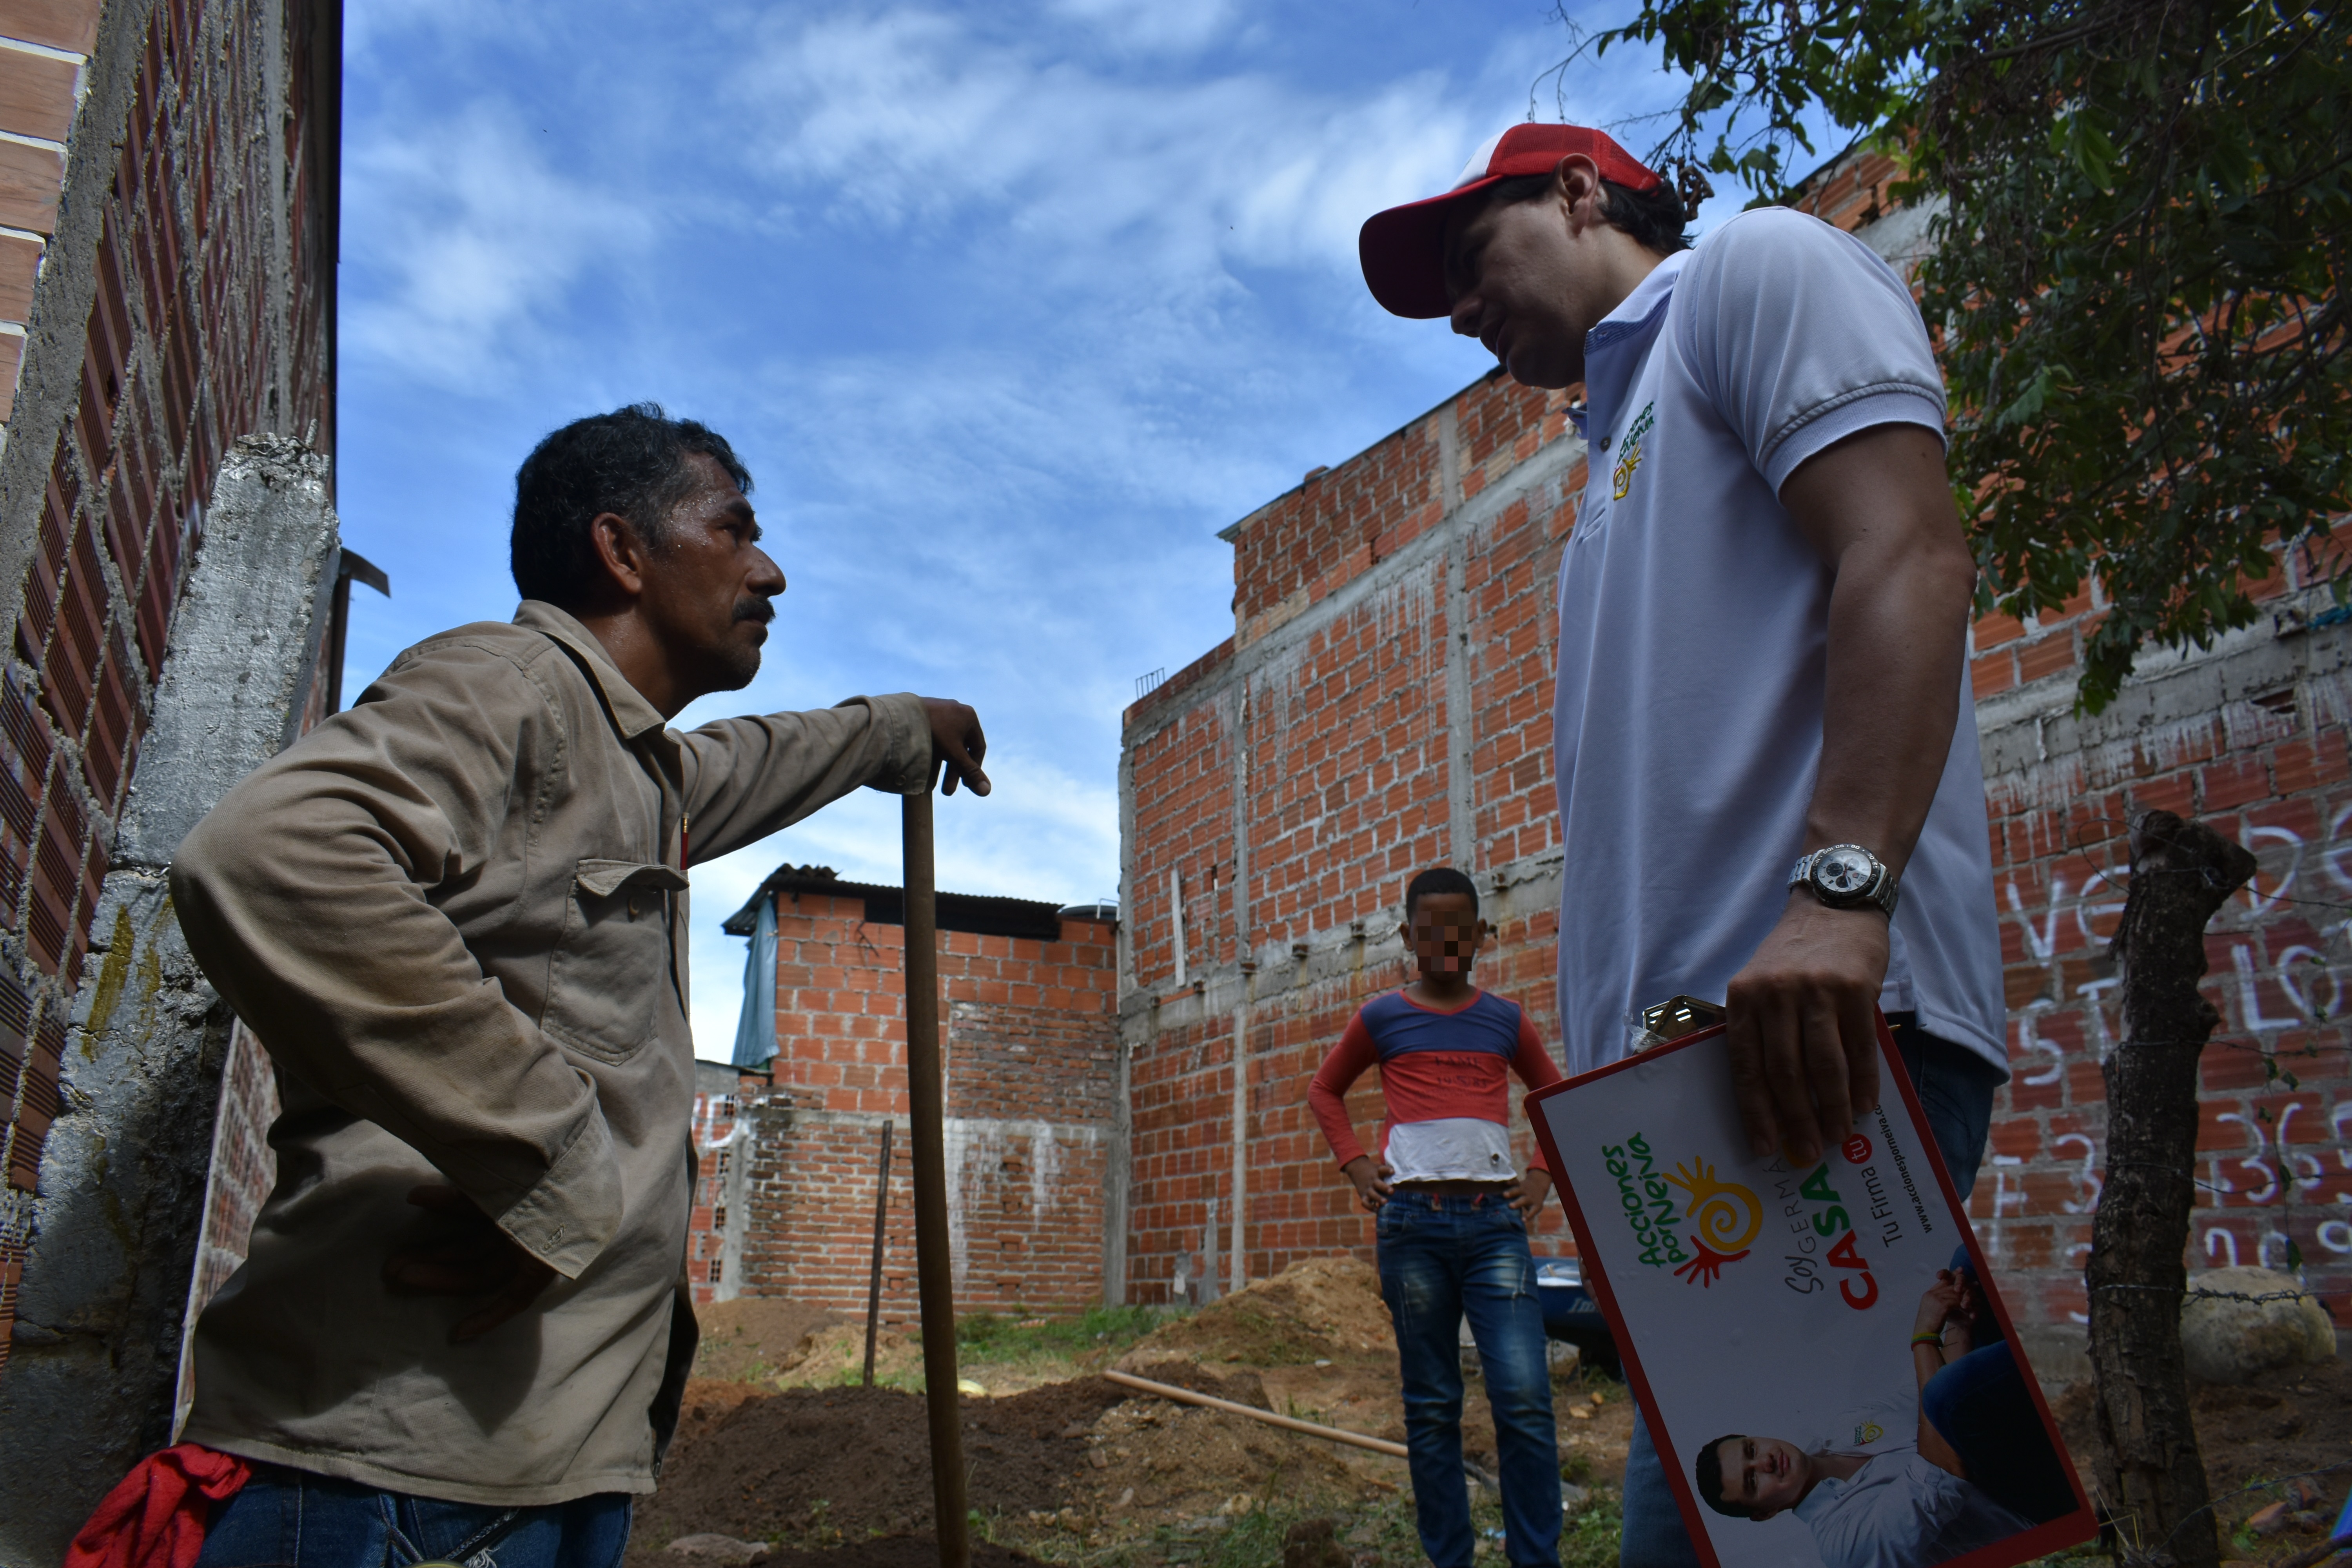  “Mejoraremos oferta de vivienda digna para familias neivanas” Germán Casagua